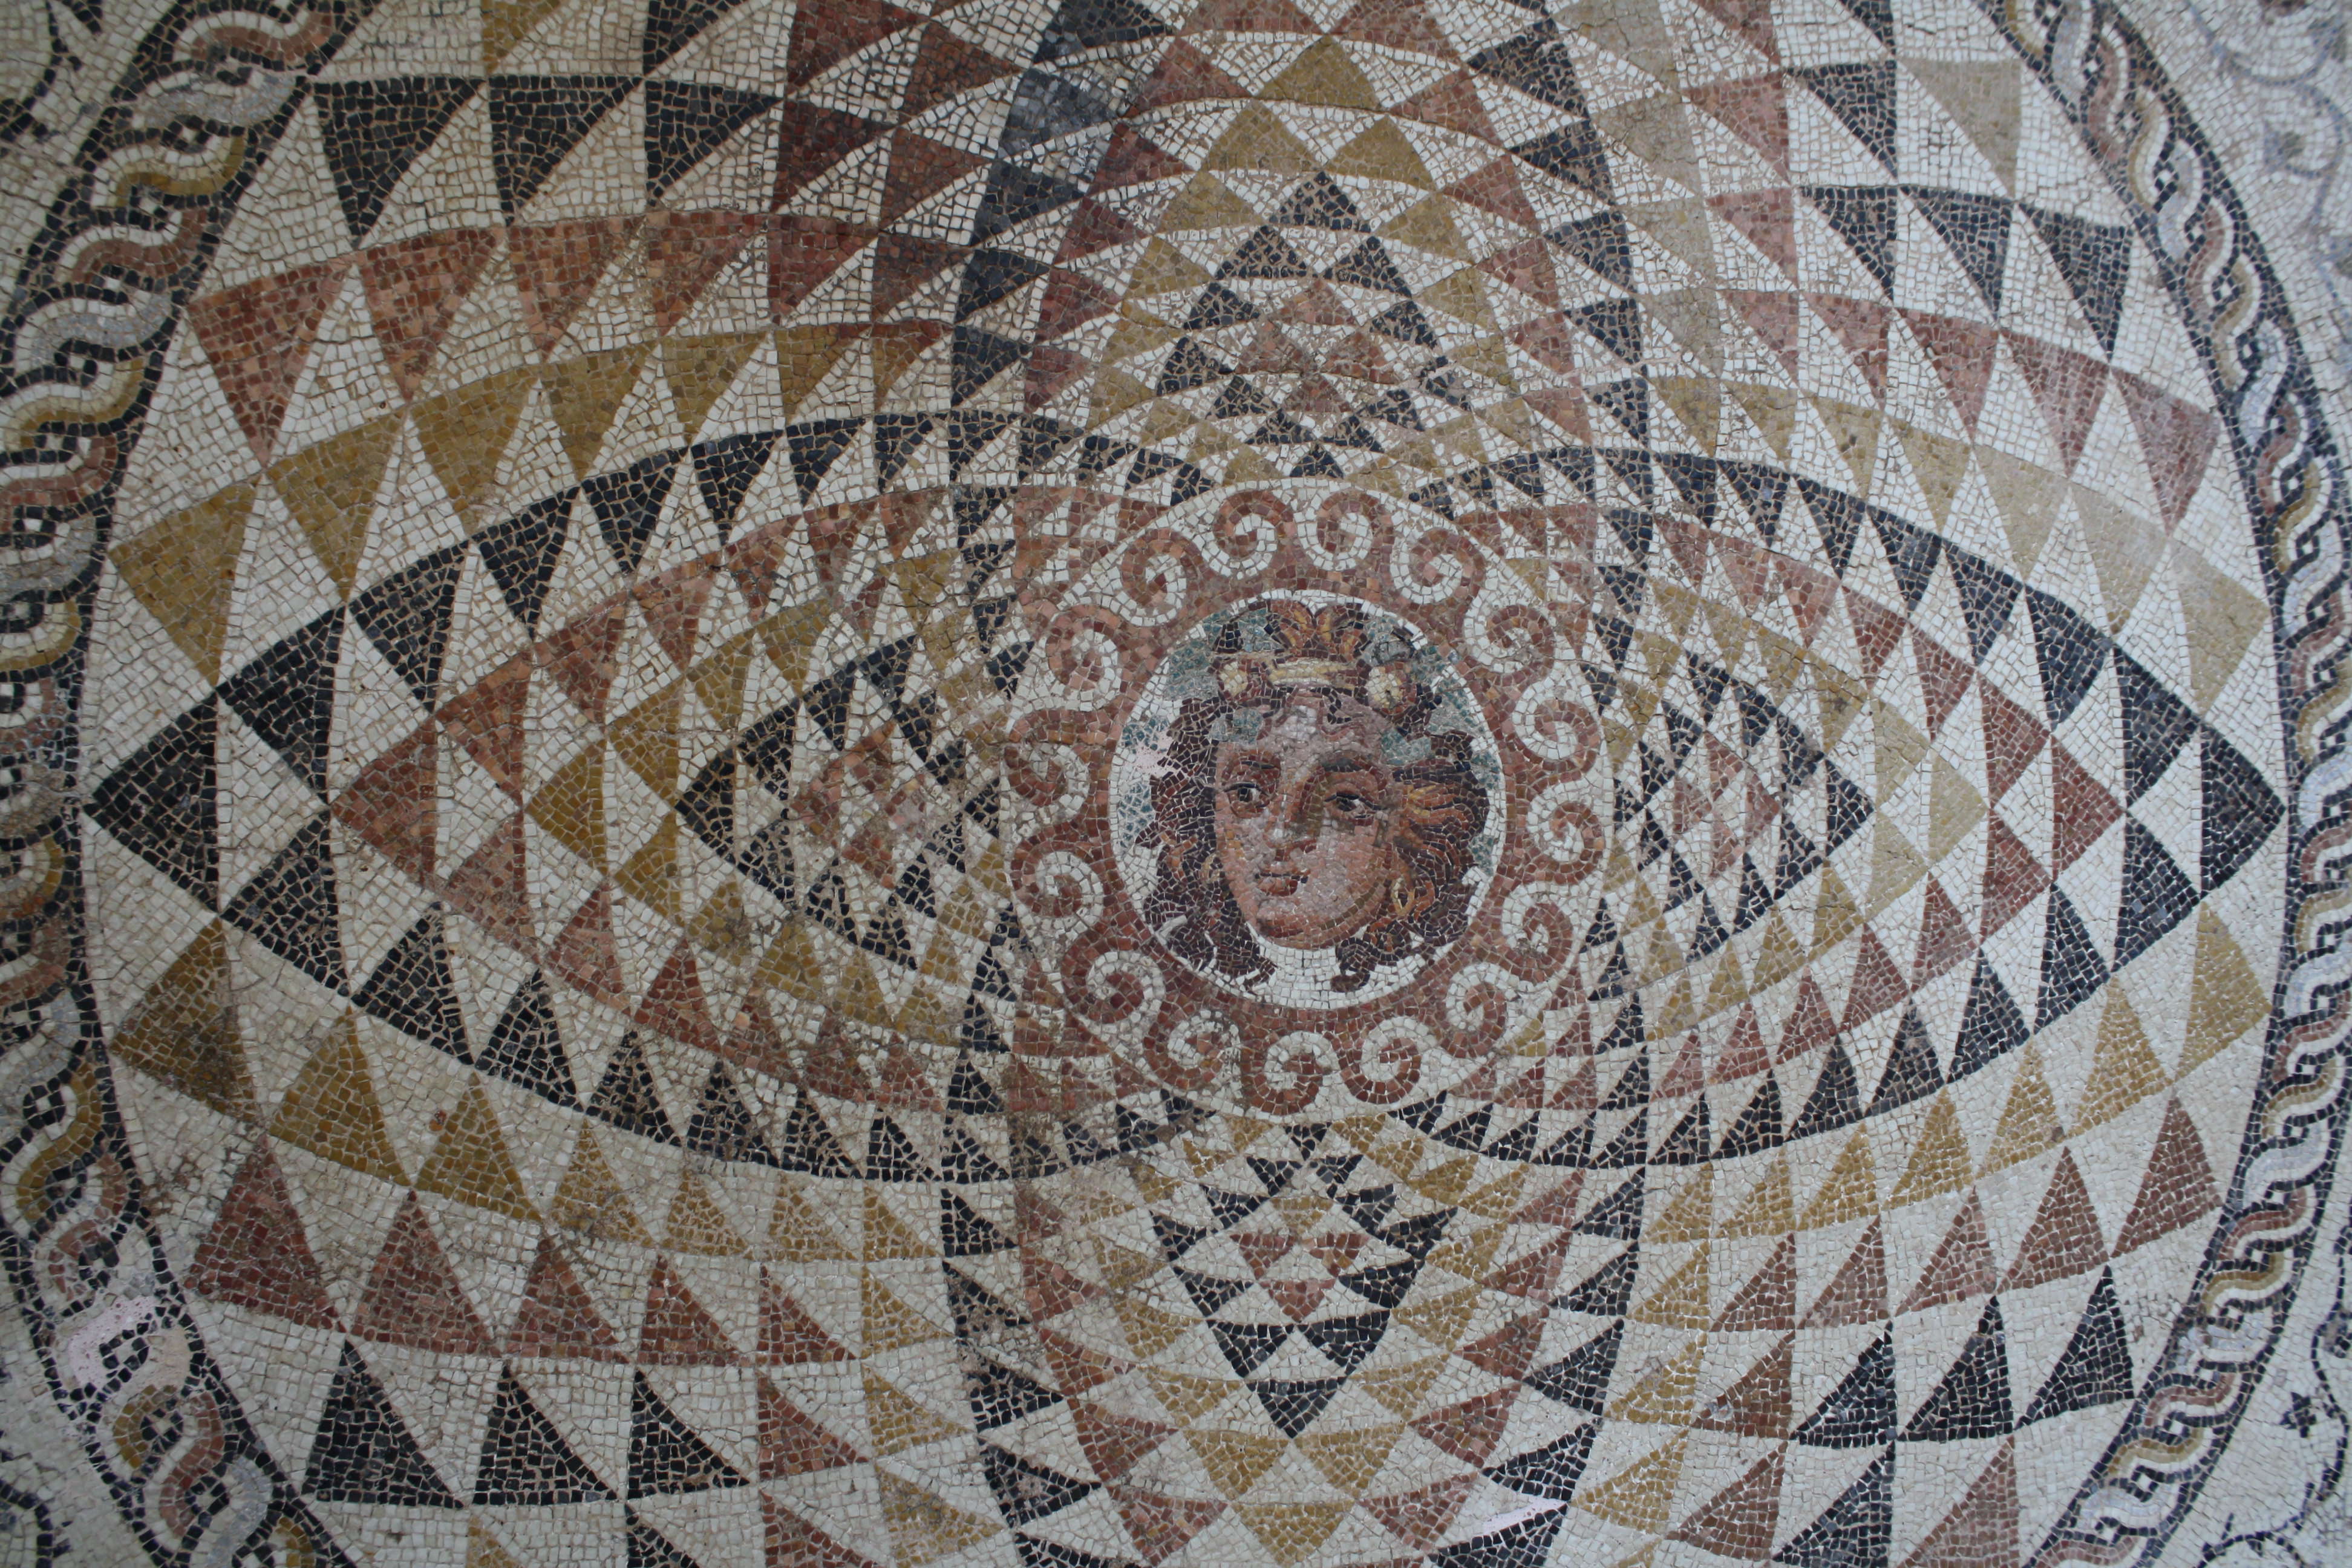 Roman Mosaic Floor (Illustration) - Ancient History Encyclopedia